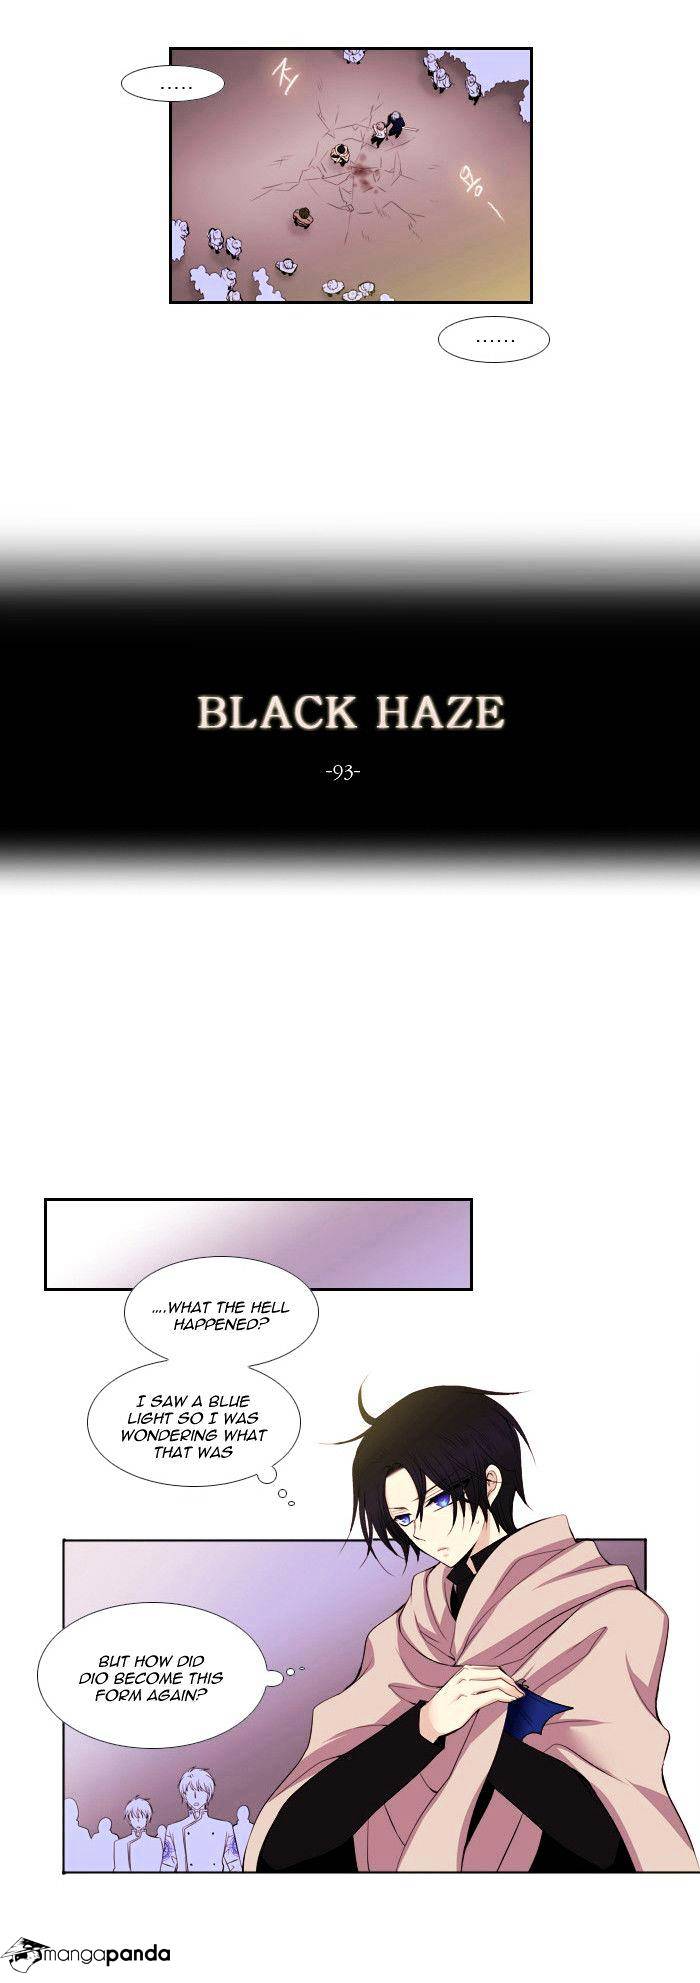 Black Haze - chapter 93 - #2